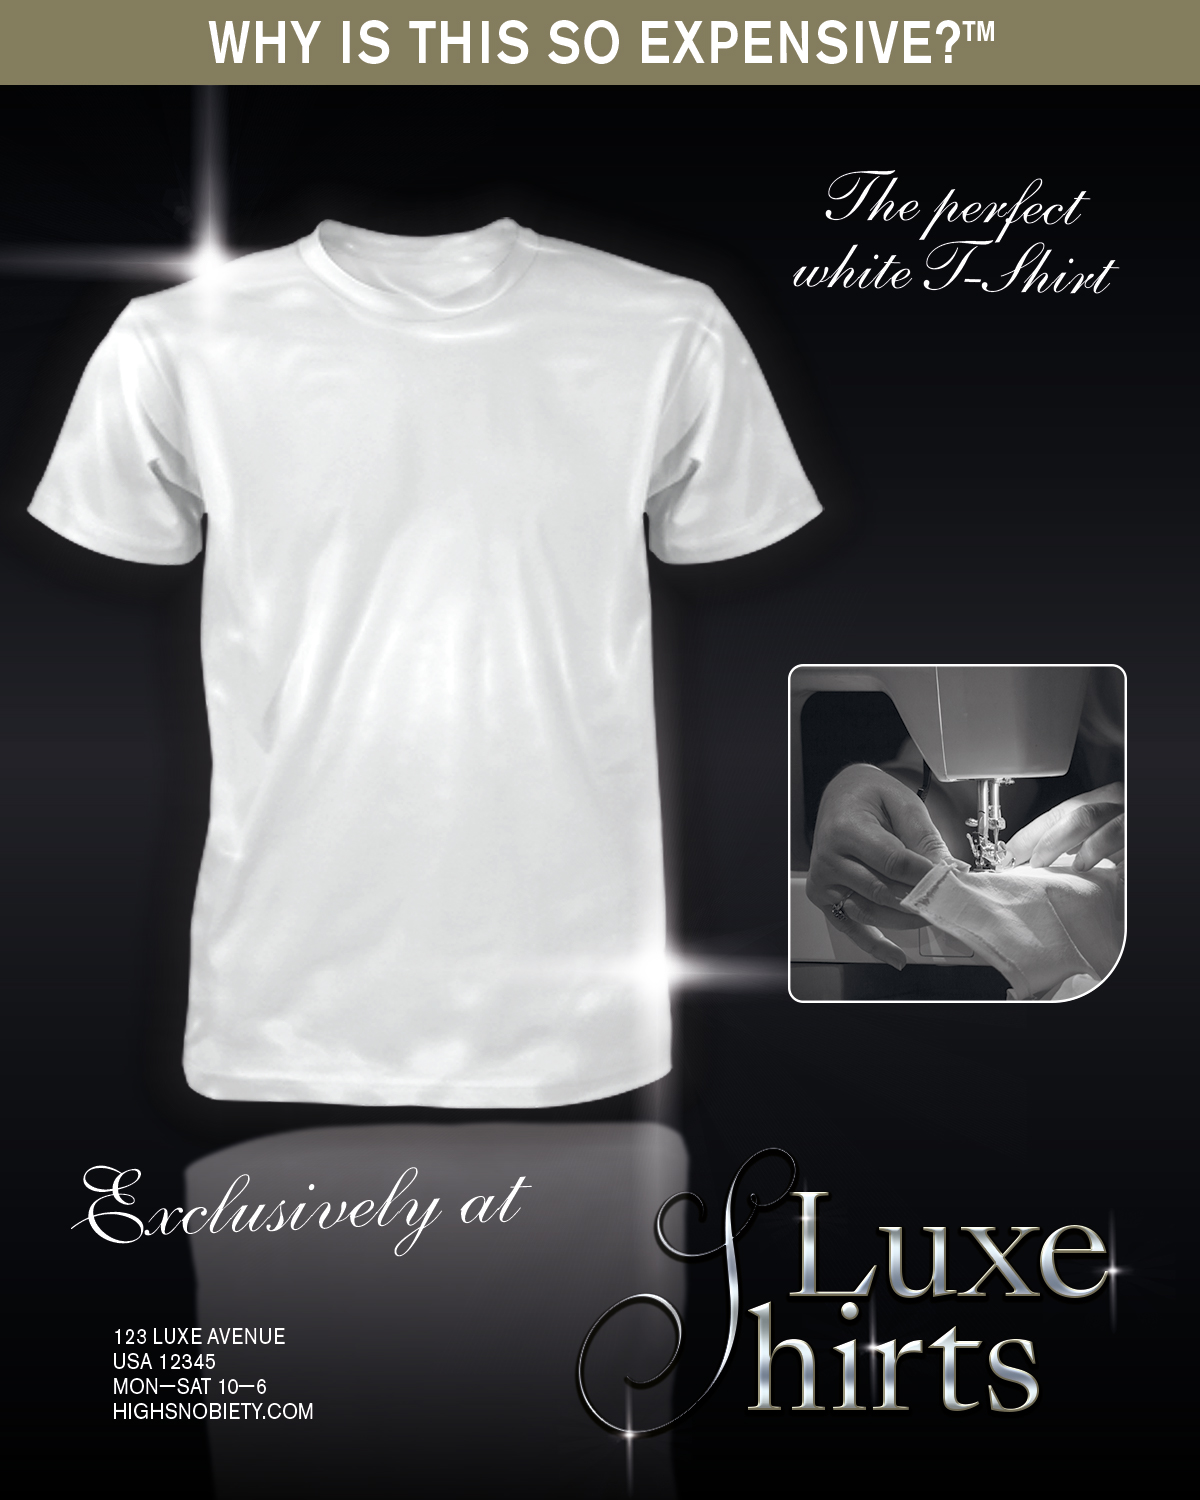 LV Bearbrick T-Shirt - Unisex - Premium